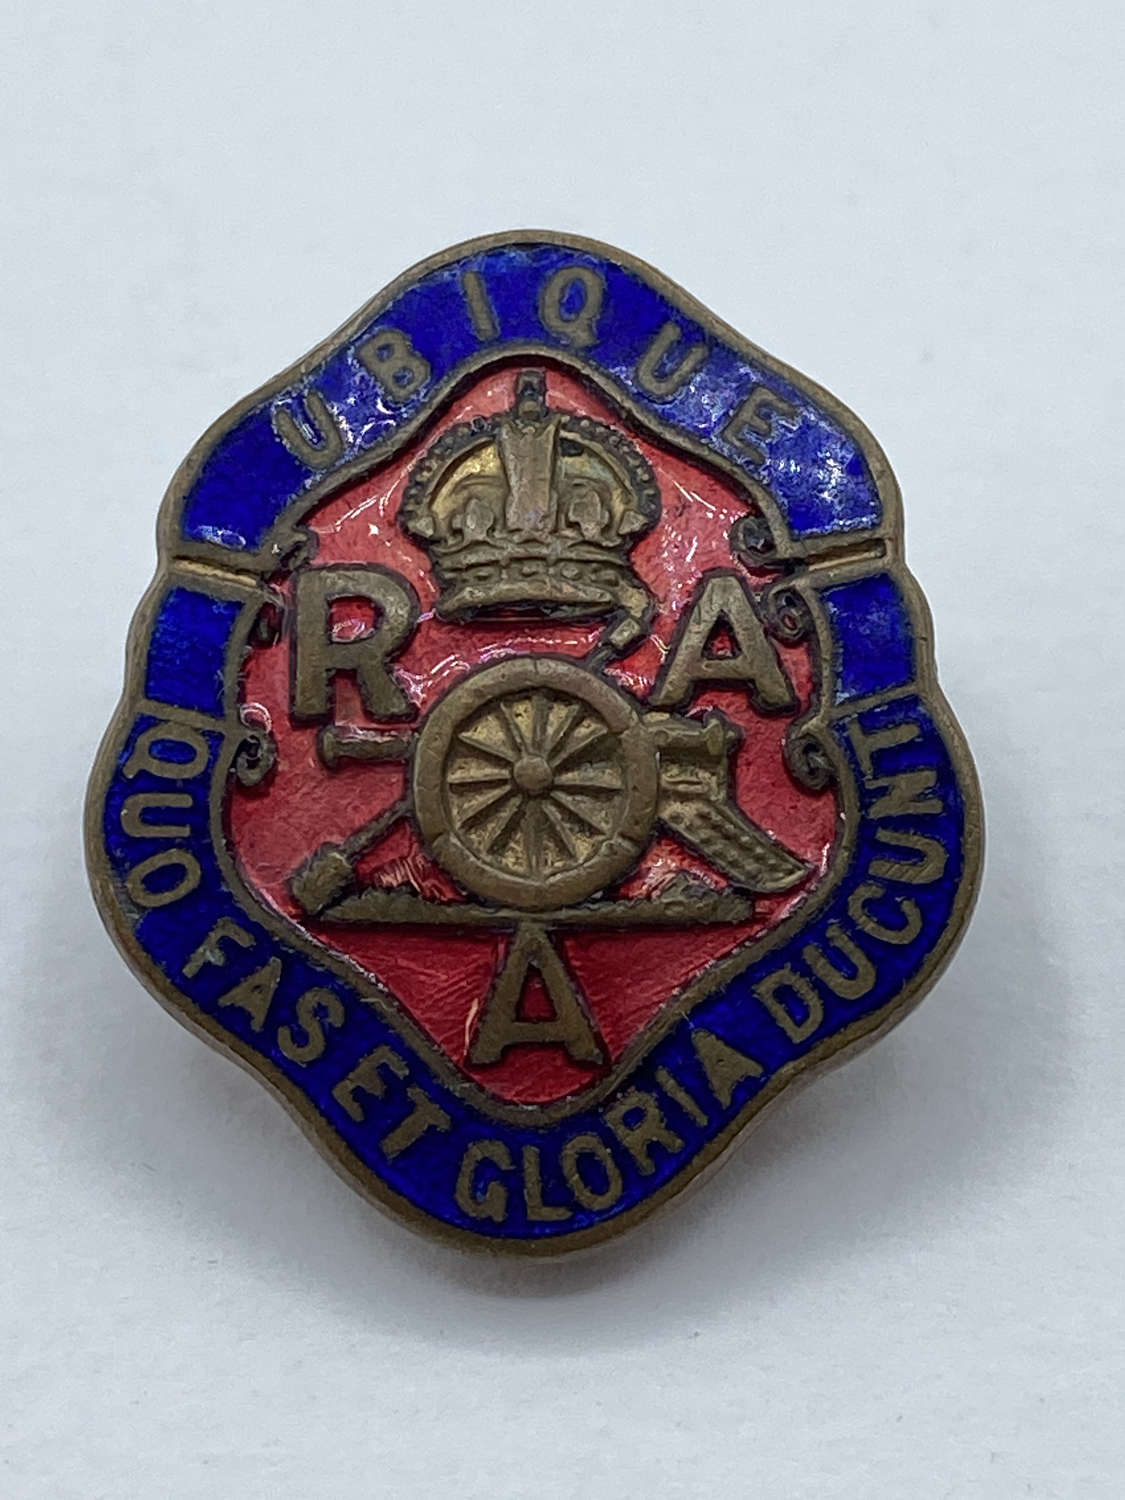 WW2 Royal Artillery Association Enamel Lapel Badge By J R GAUNT LONDON